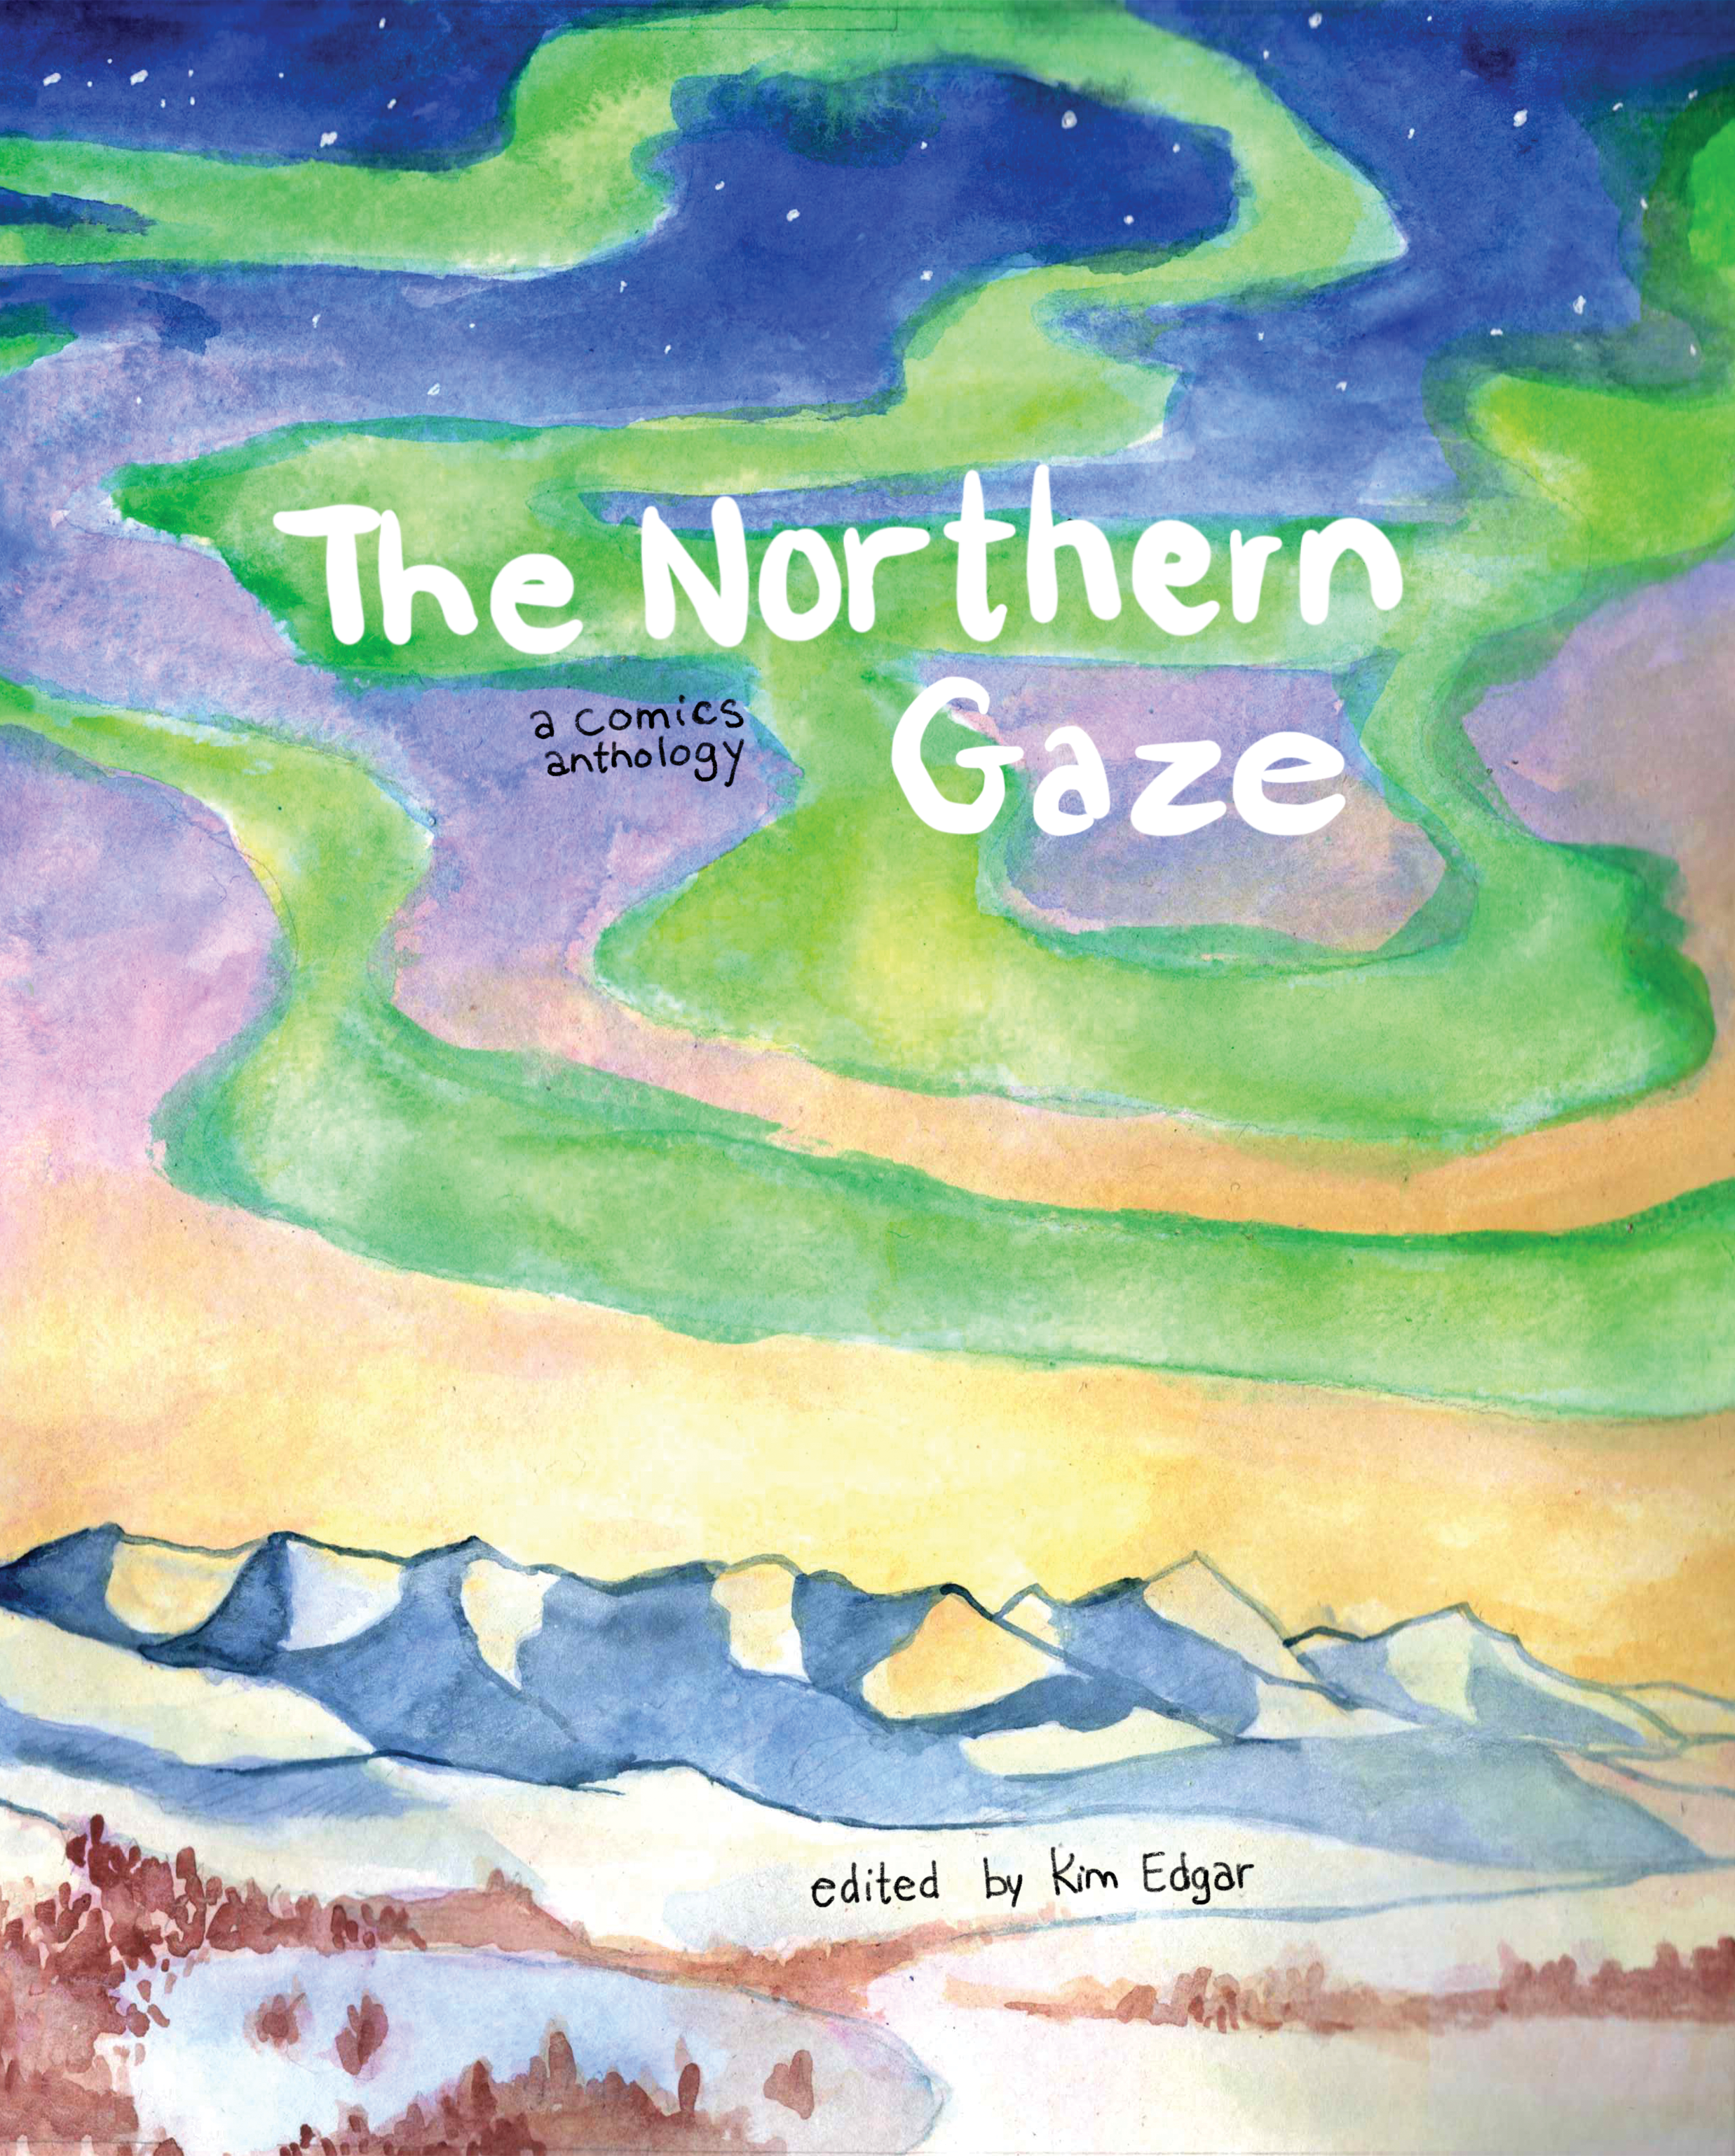 The Northern Gaze